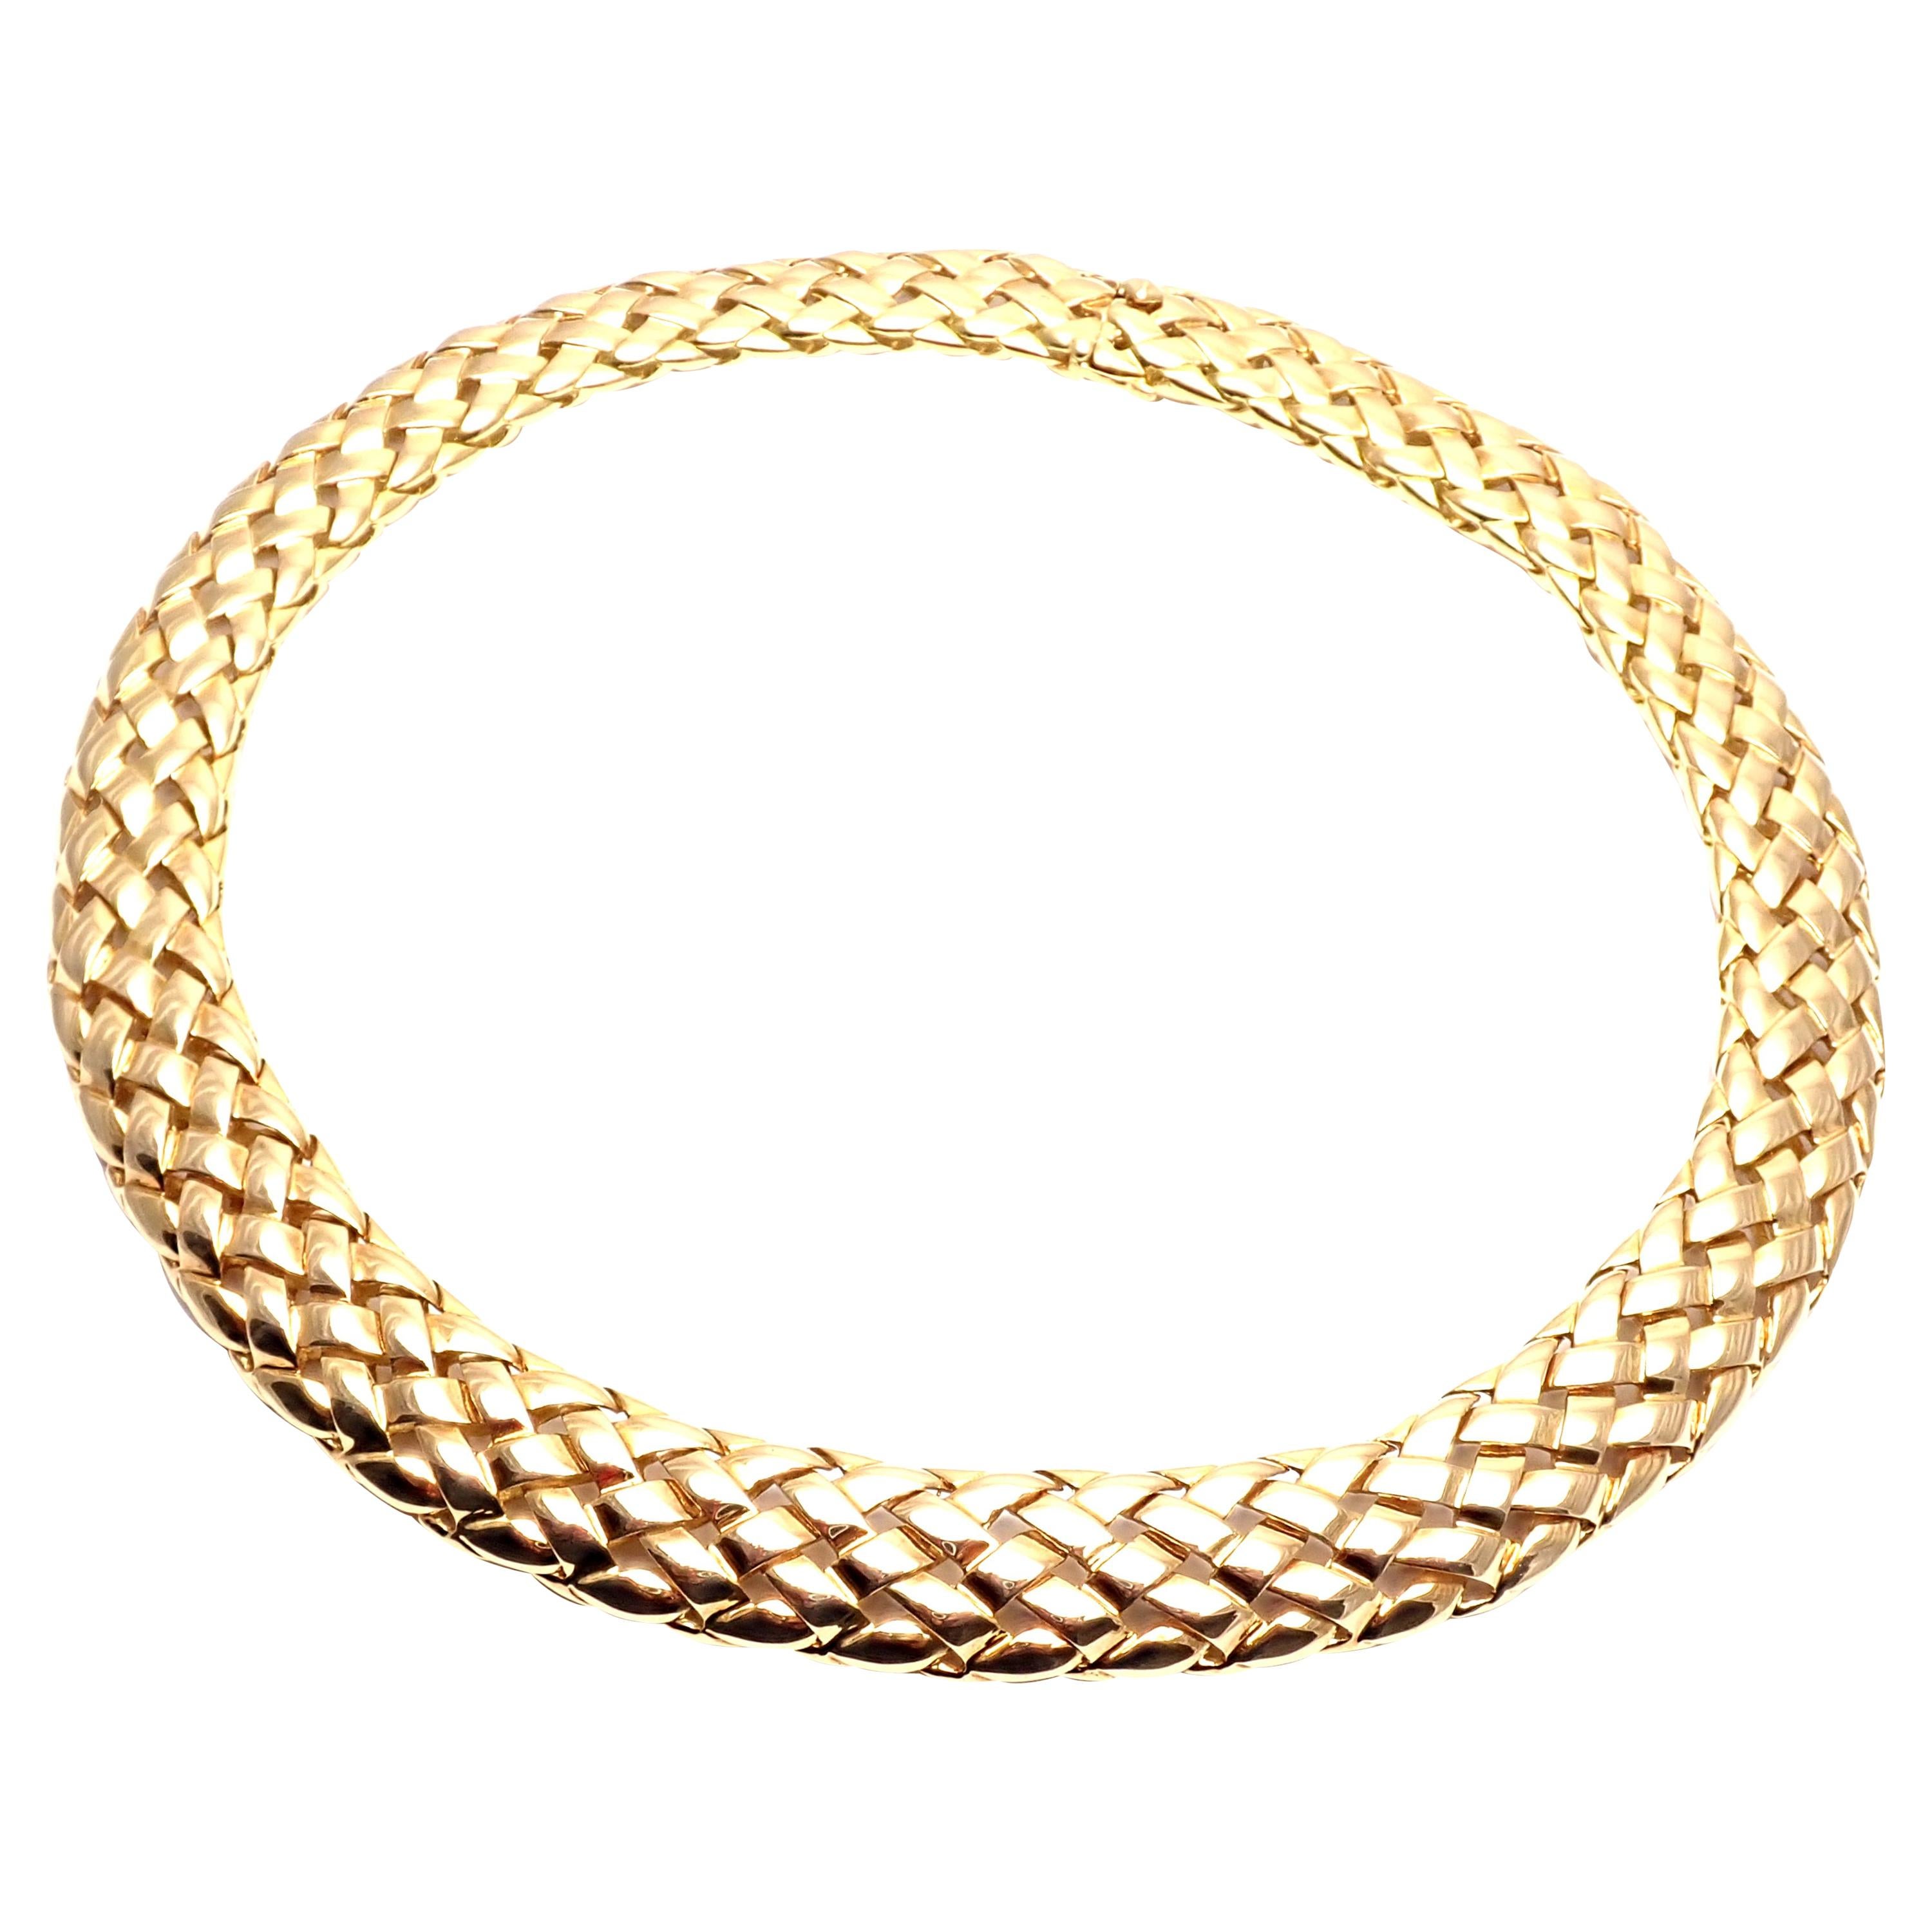 Vintage Van Cleef & Arpels Basket Weave Wide Yellow Gold Choker Necklace